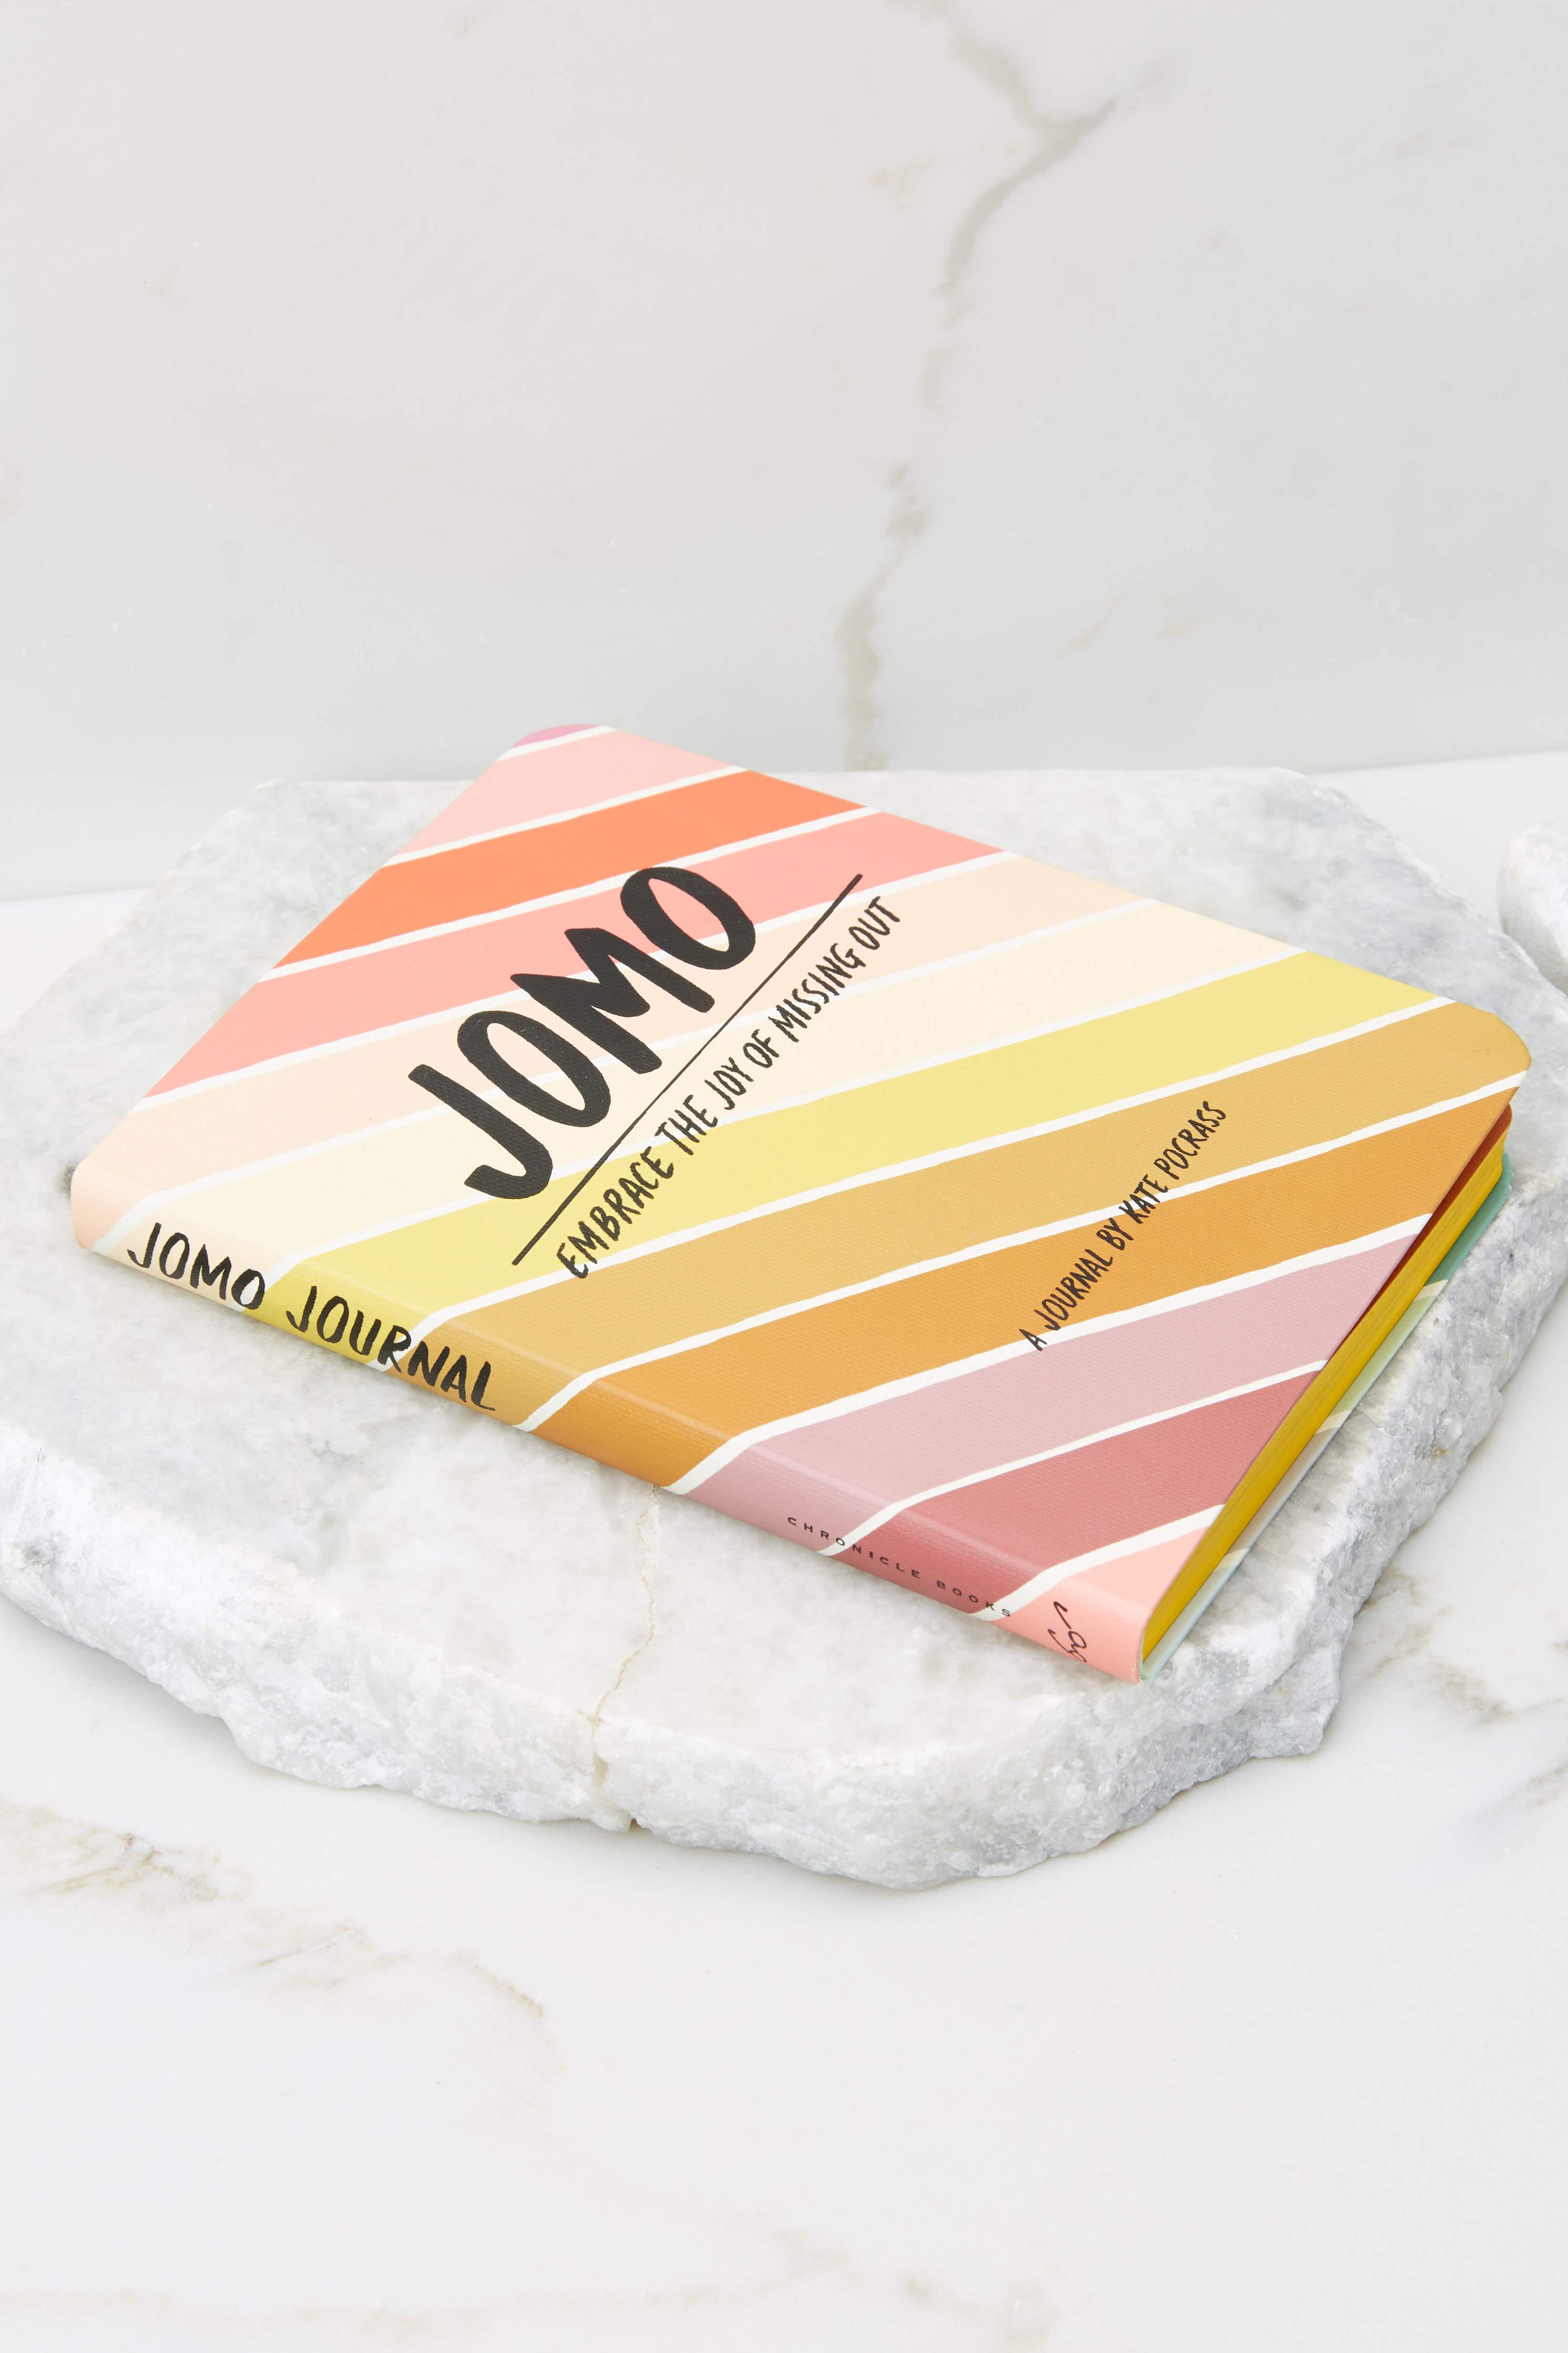 Jomo Journal